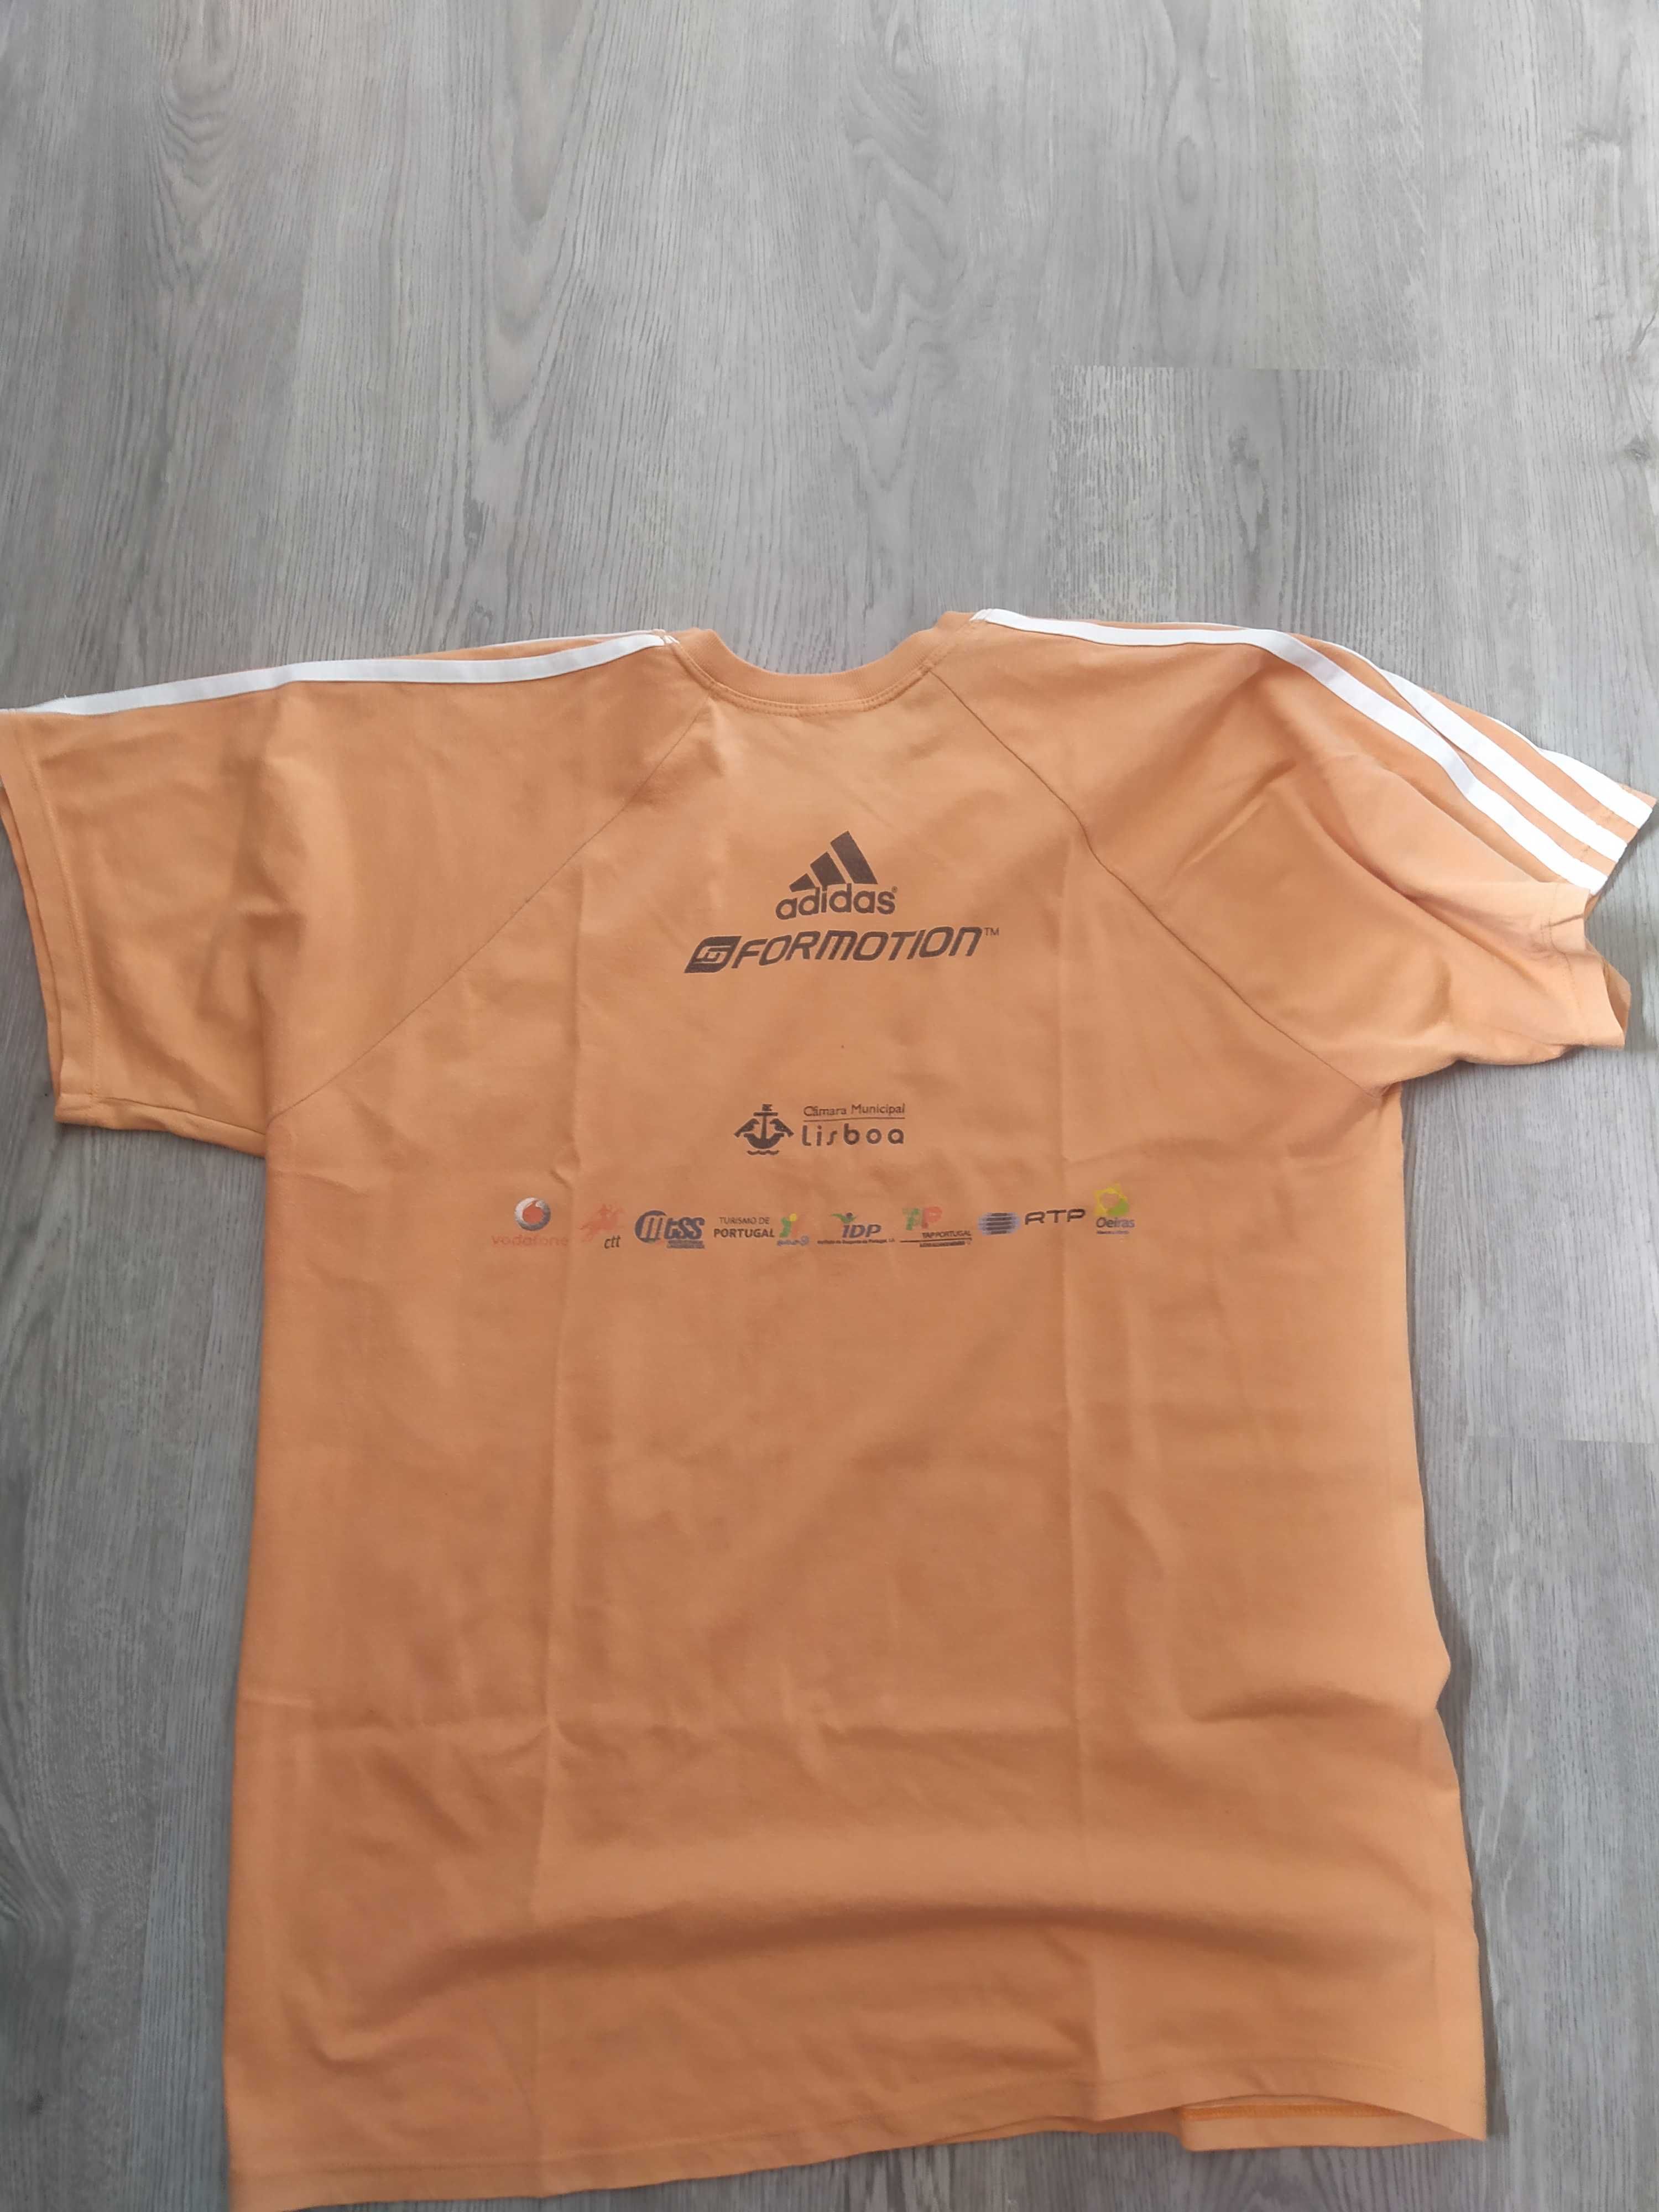 T-shirts Adidas Meia Maratona Lisboa (pontes)